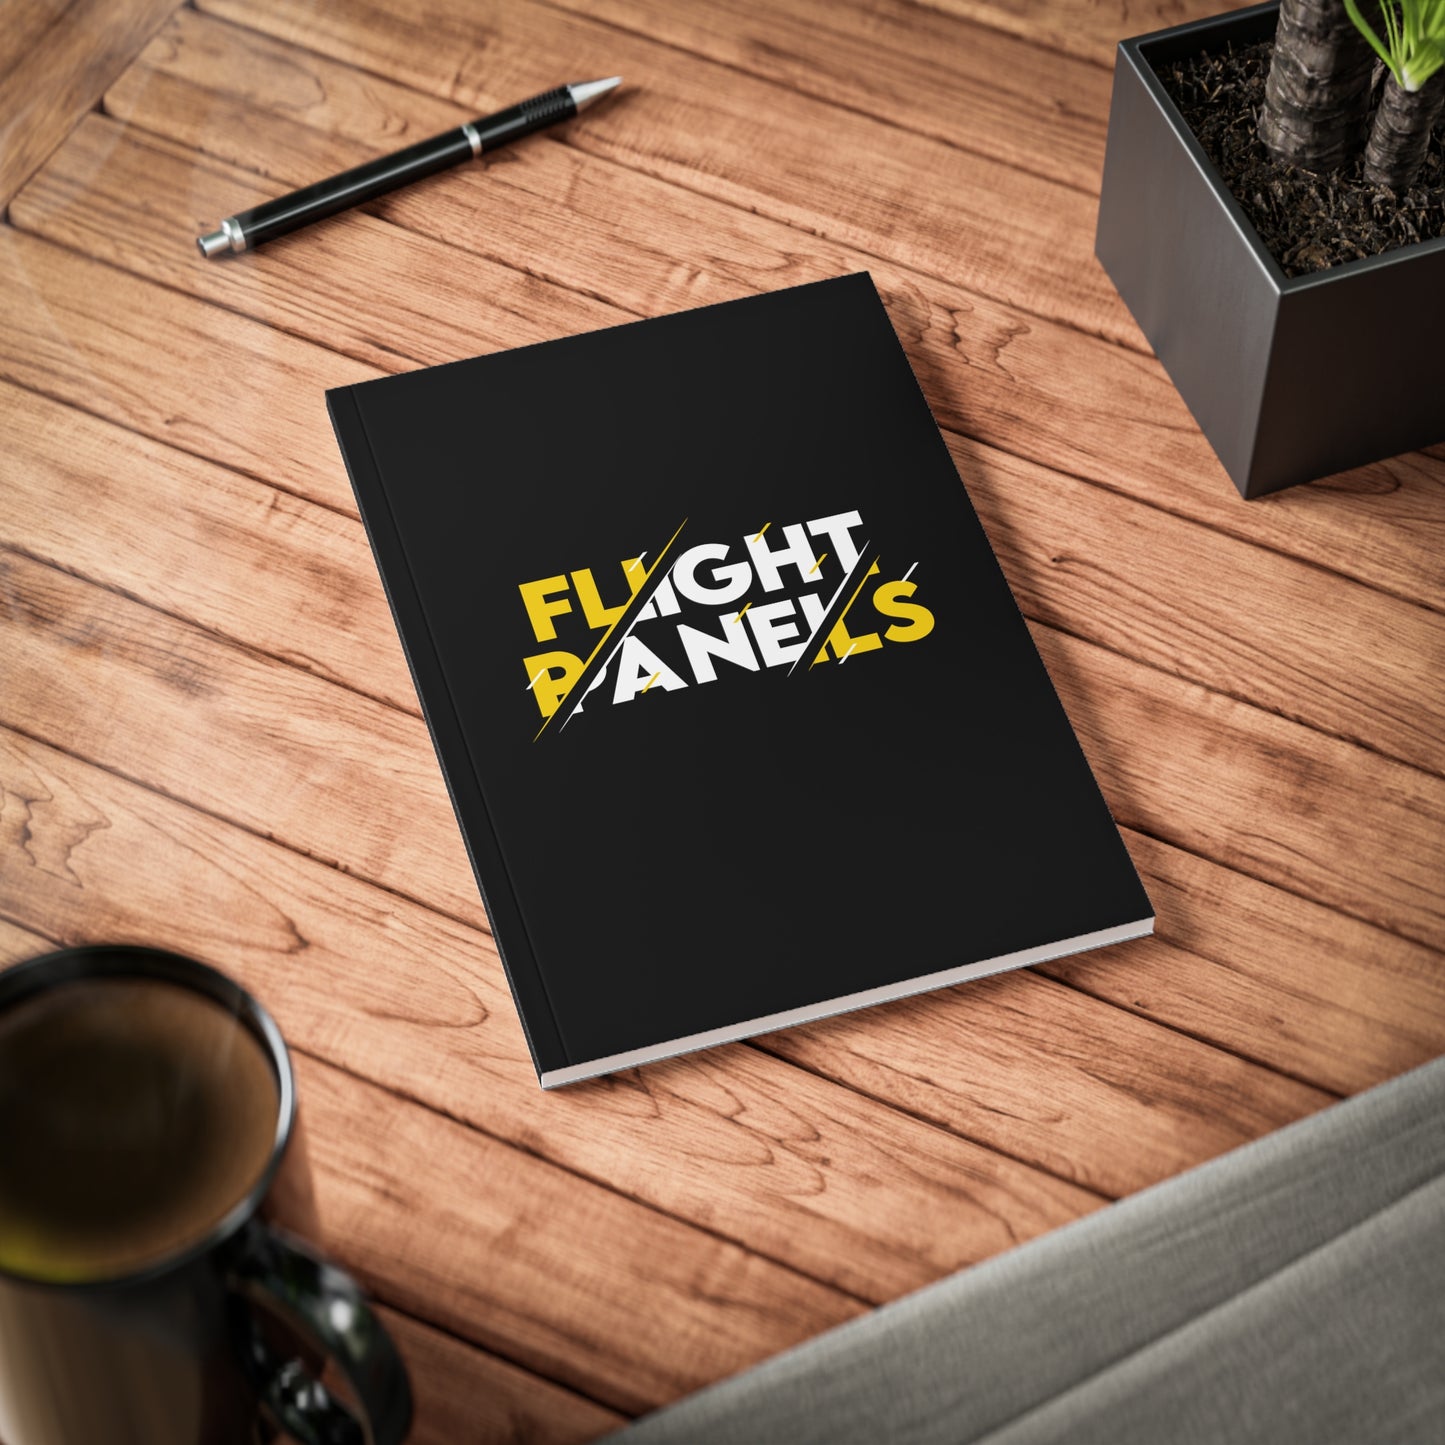 A5 Softcover Notebook - "Flight Panels"